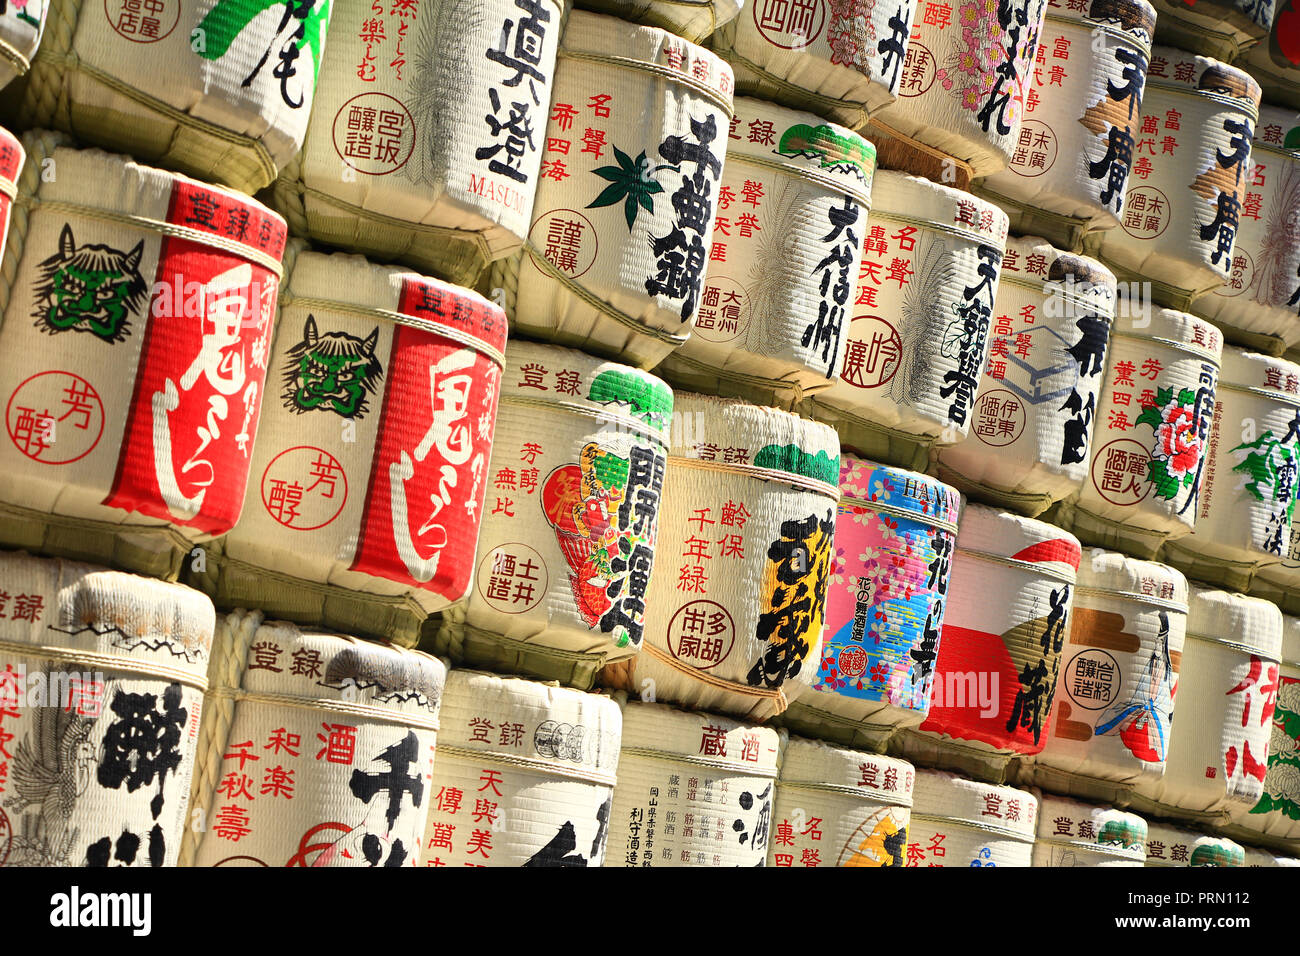 Sake barrels in Yoyogi Park, Yoyogikamizonocho, Shibuya Toyko, Japan Stock Photo